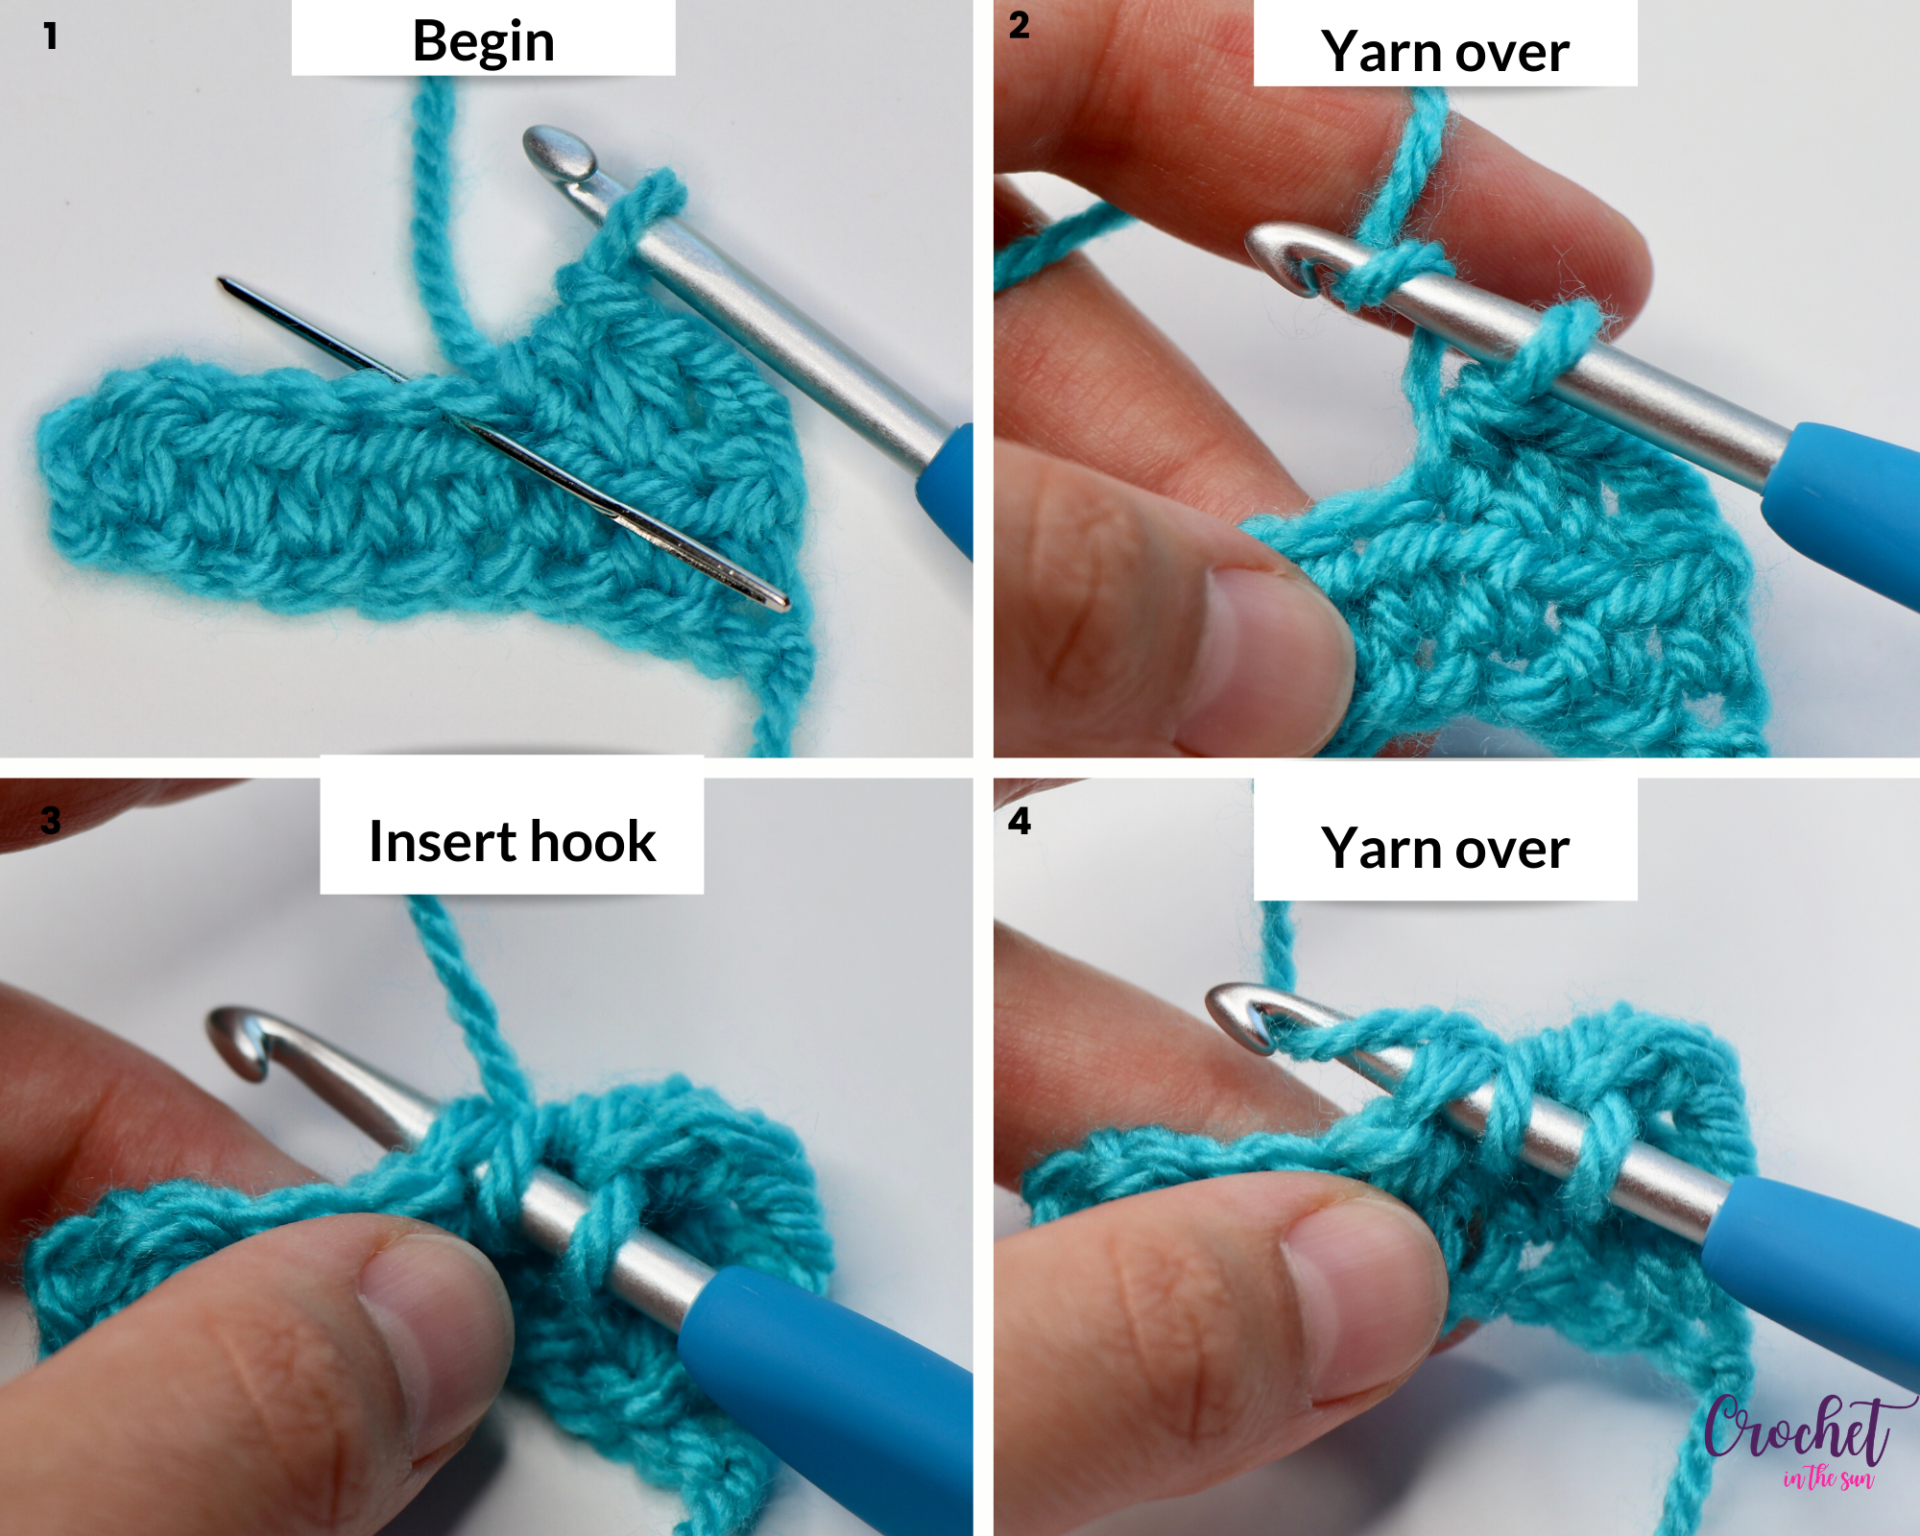 How To Make How to Crochet for Beginners: Single Crochet Online